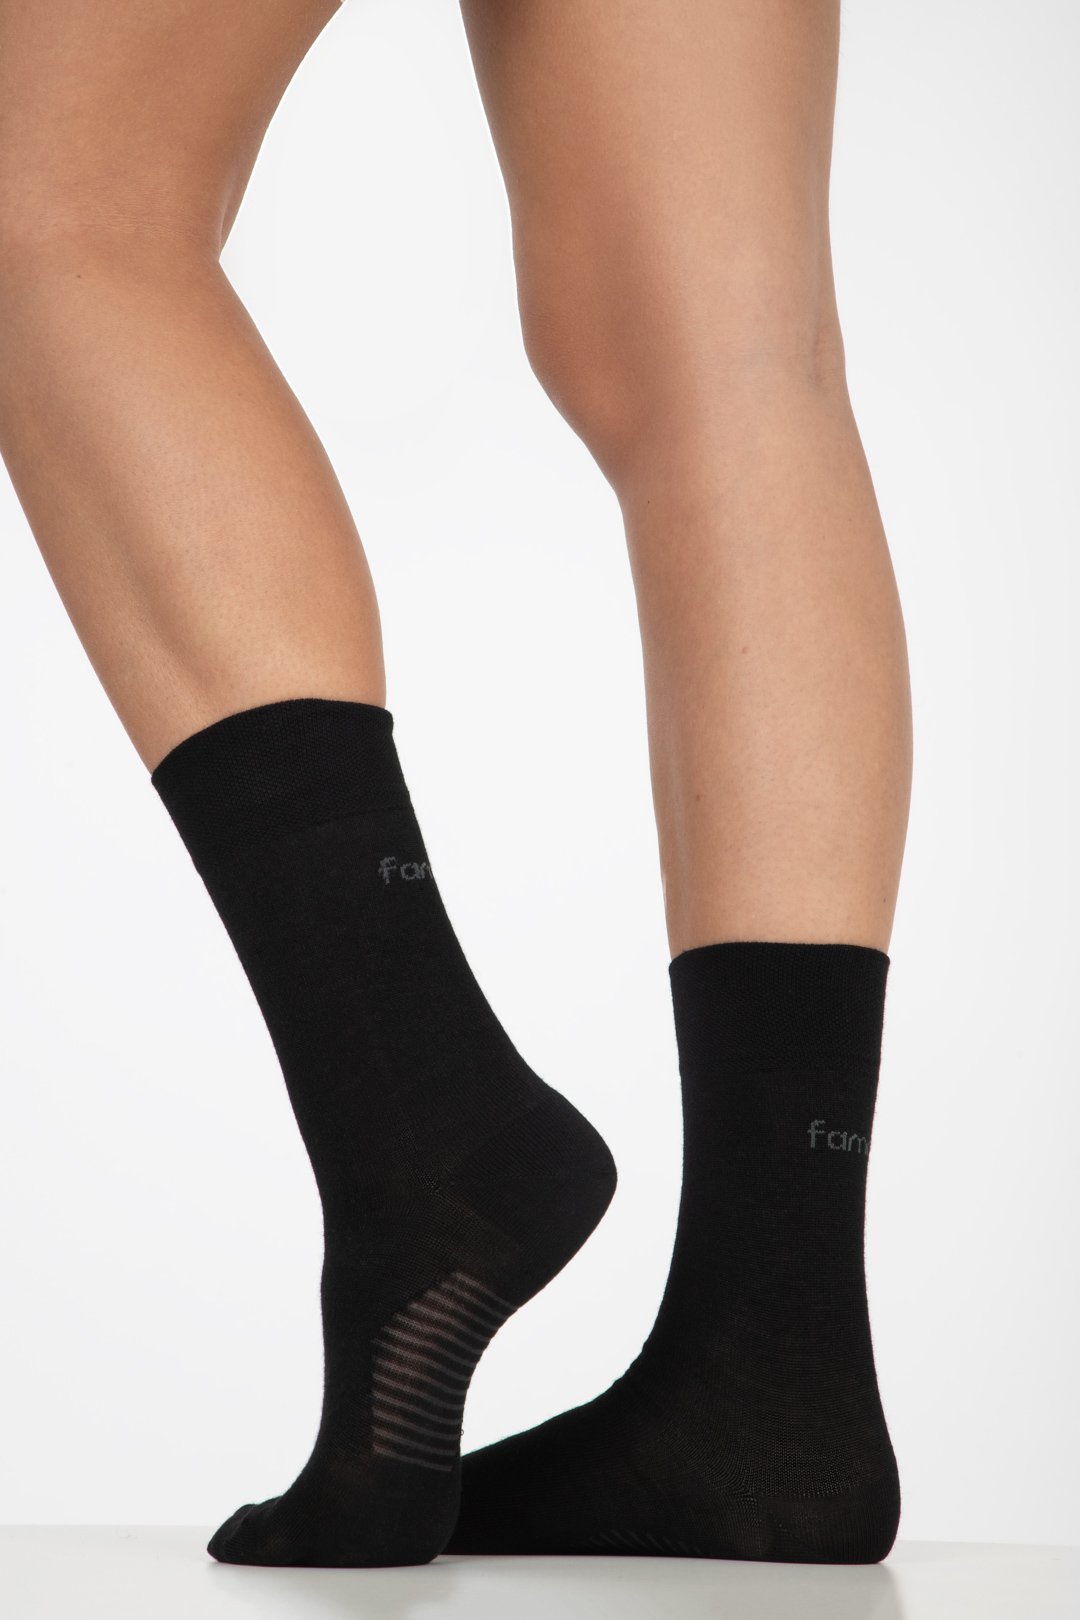 schwarze Wollsocken, hohe Socken für Damen